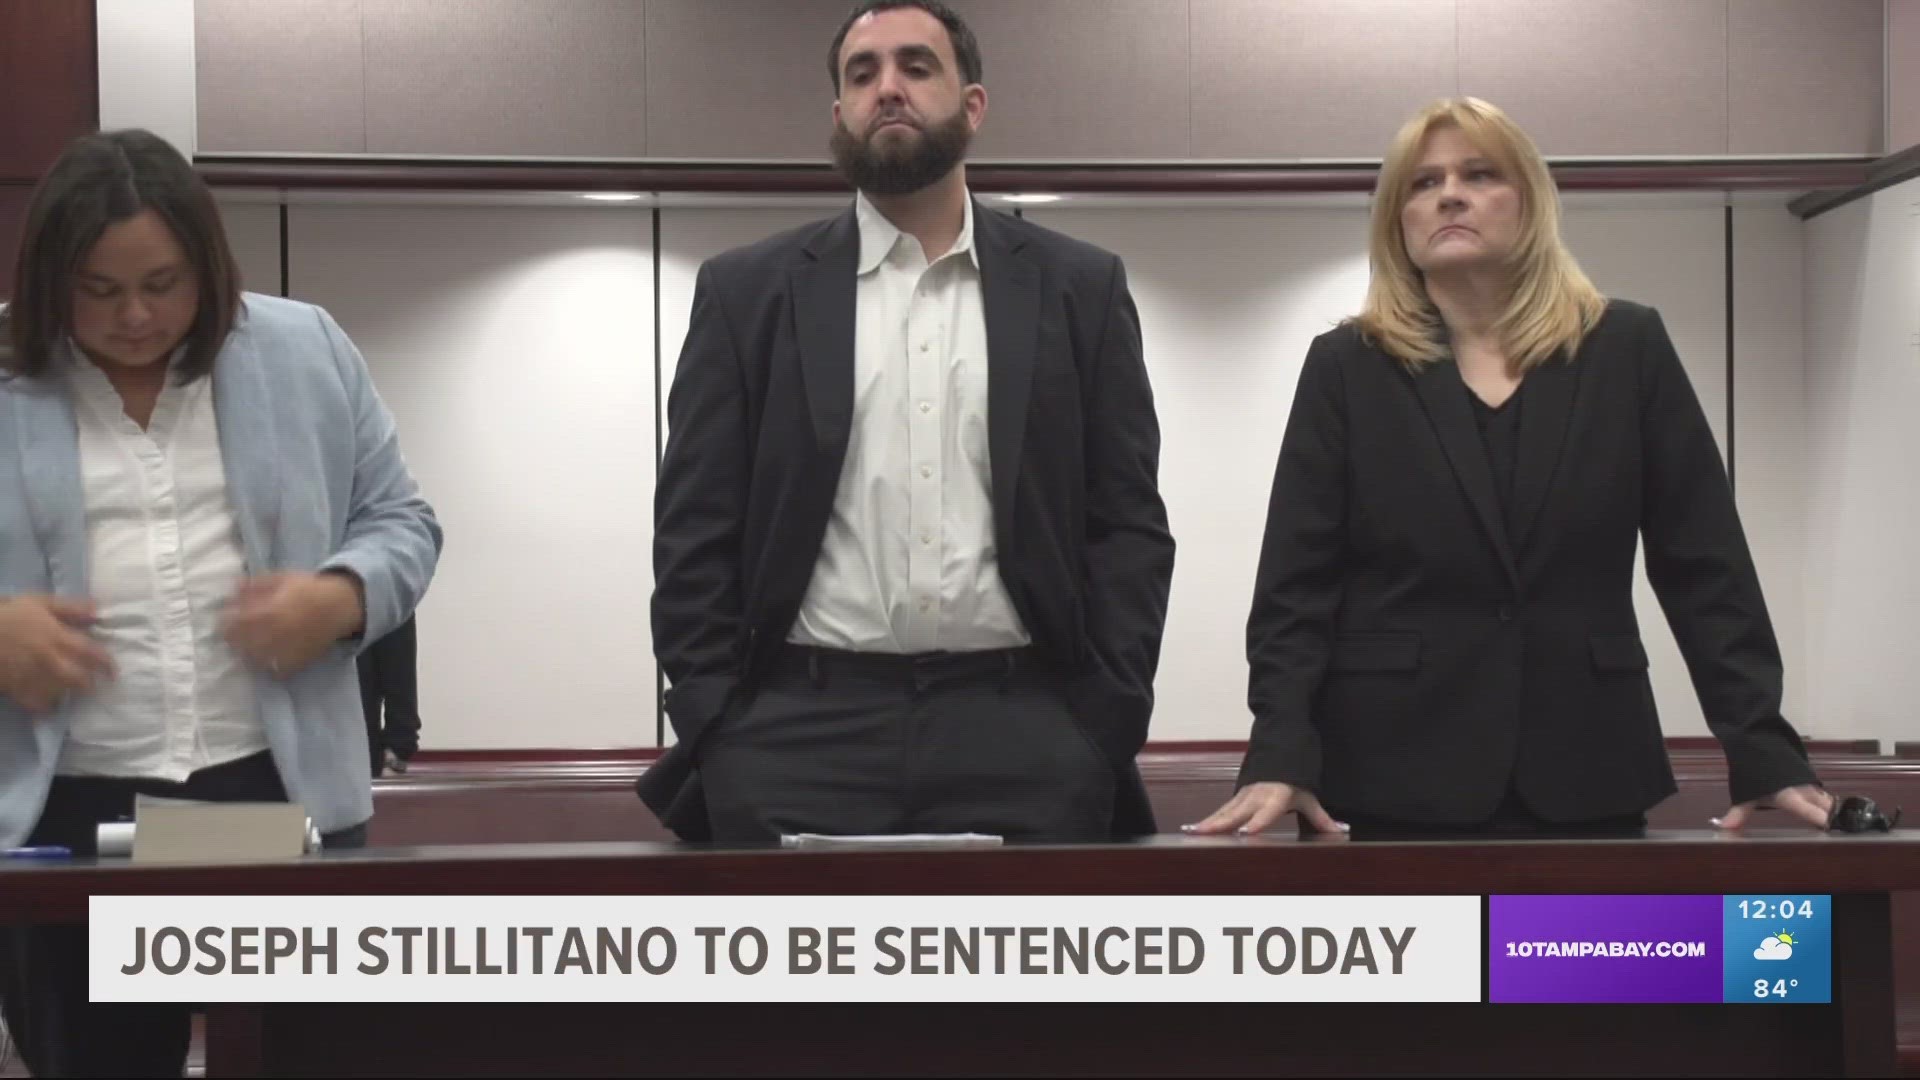 Joseph Stillitano was found guilty of manslaughter last month.